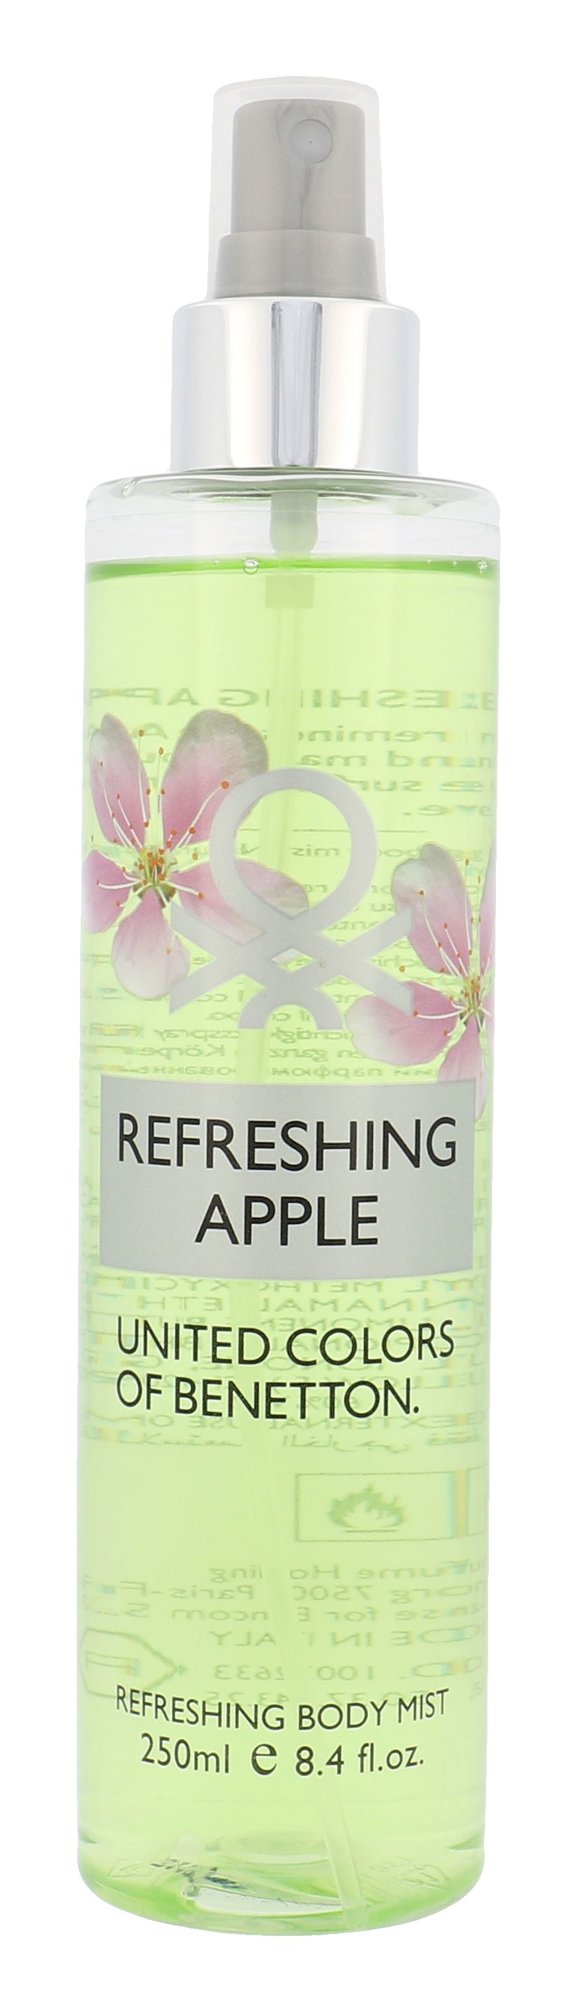 Benetton Refreshing Apple